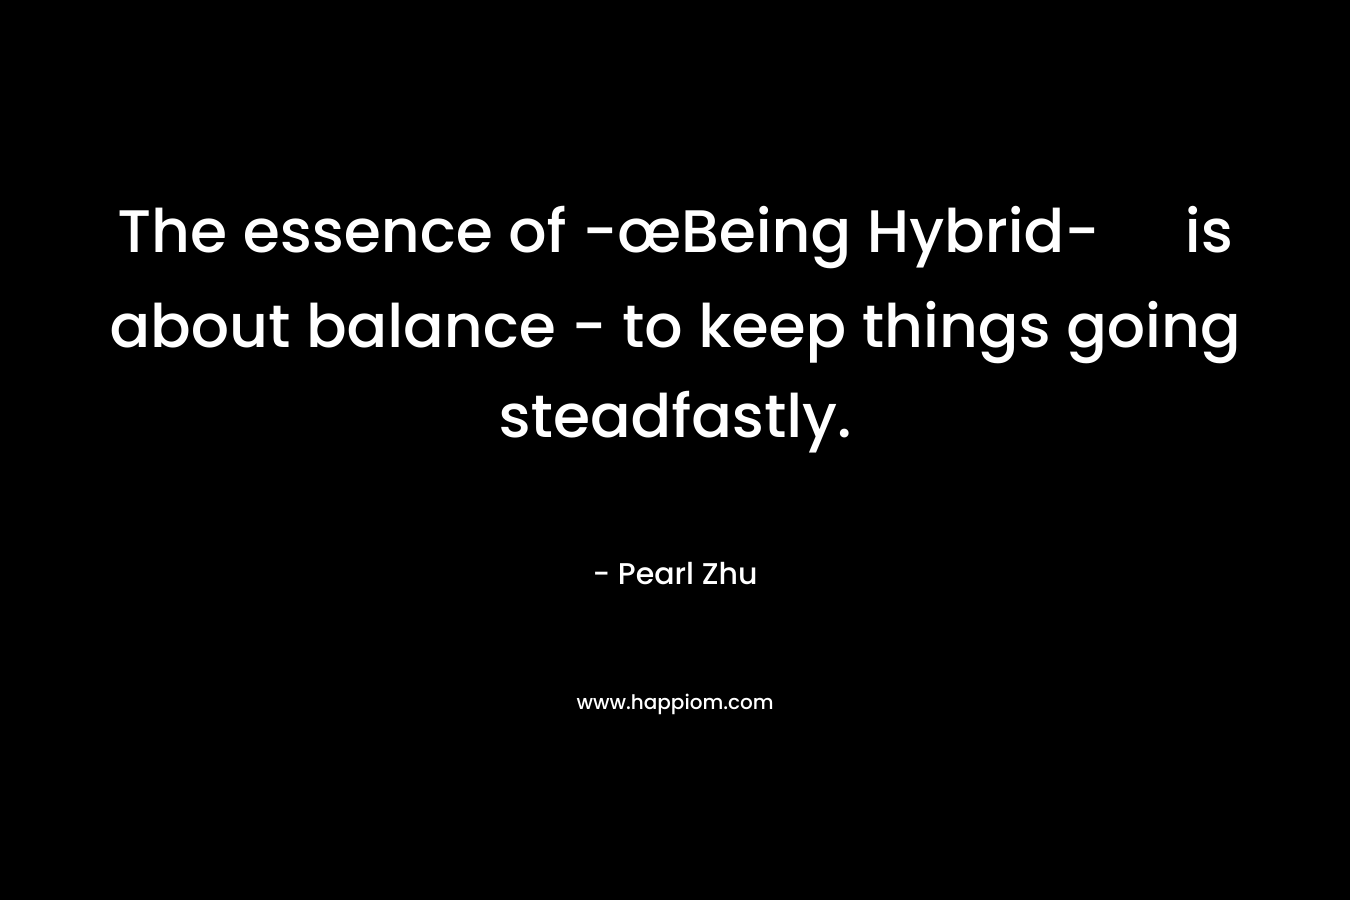 The essence of -œBeing Hybrid- is about balance - to keep things going steadfastly.